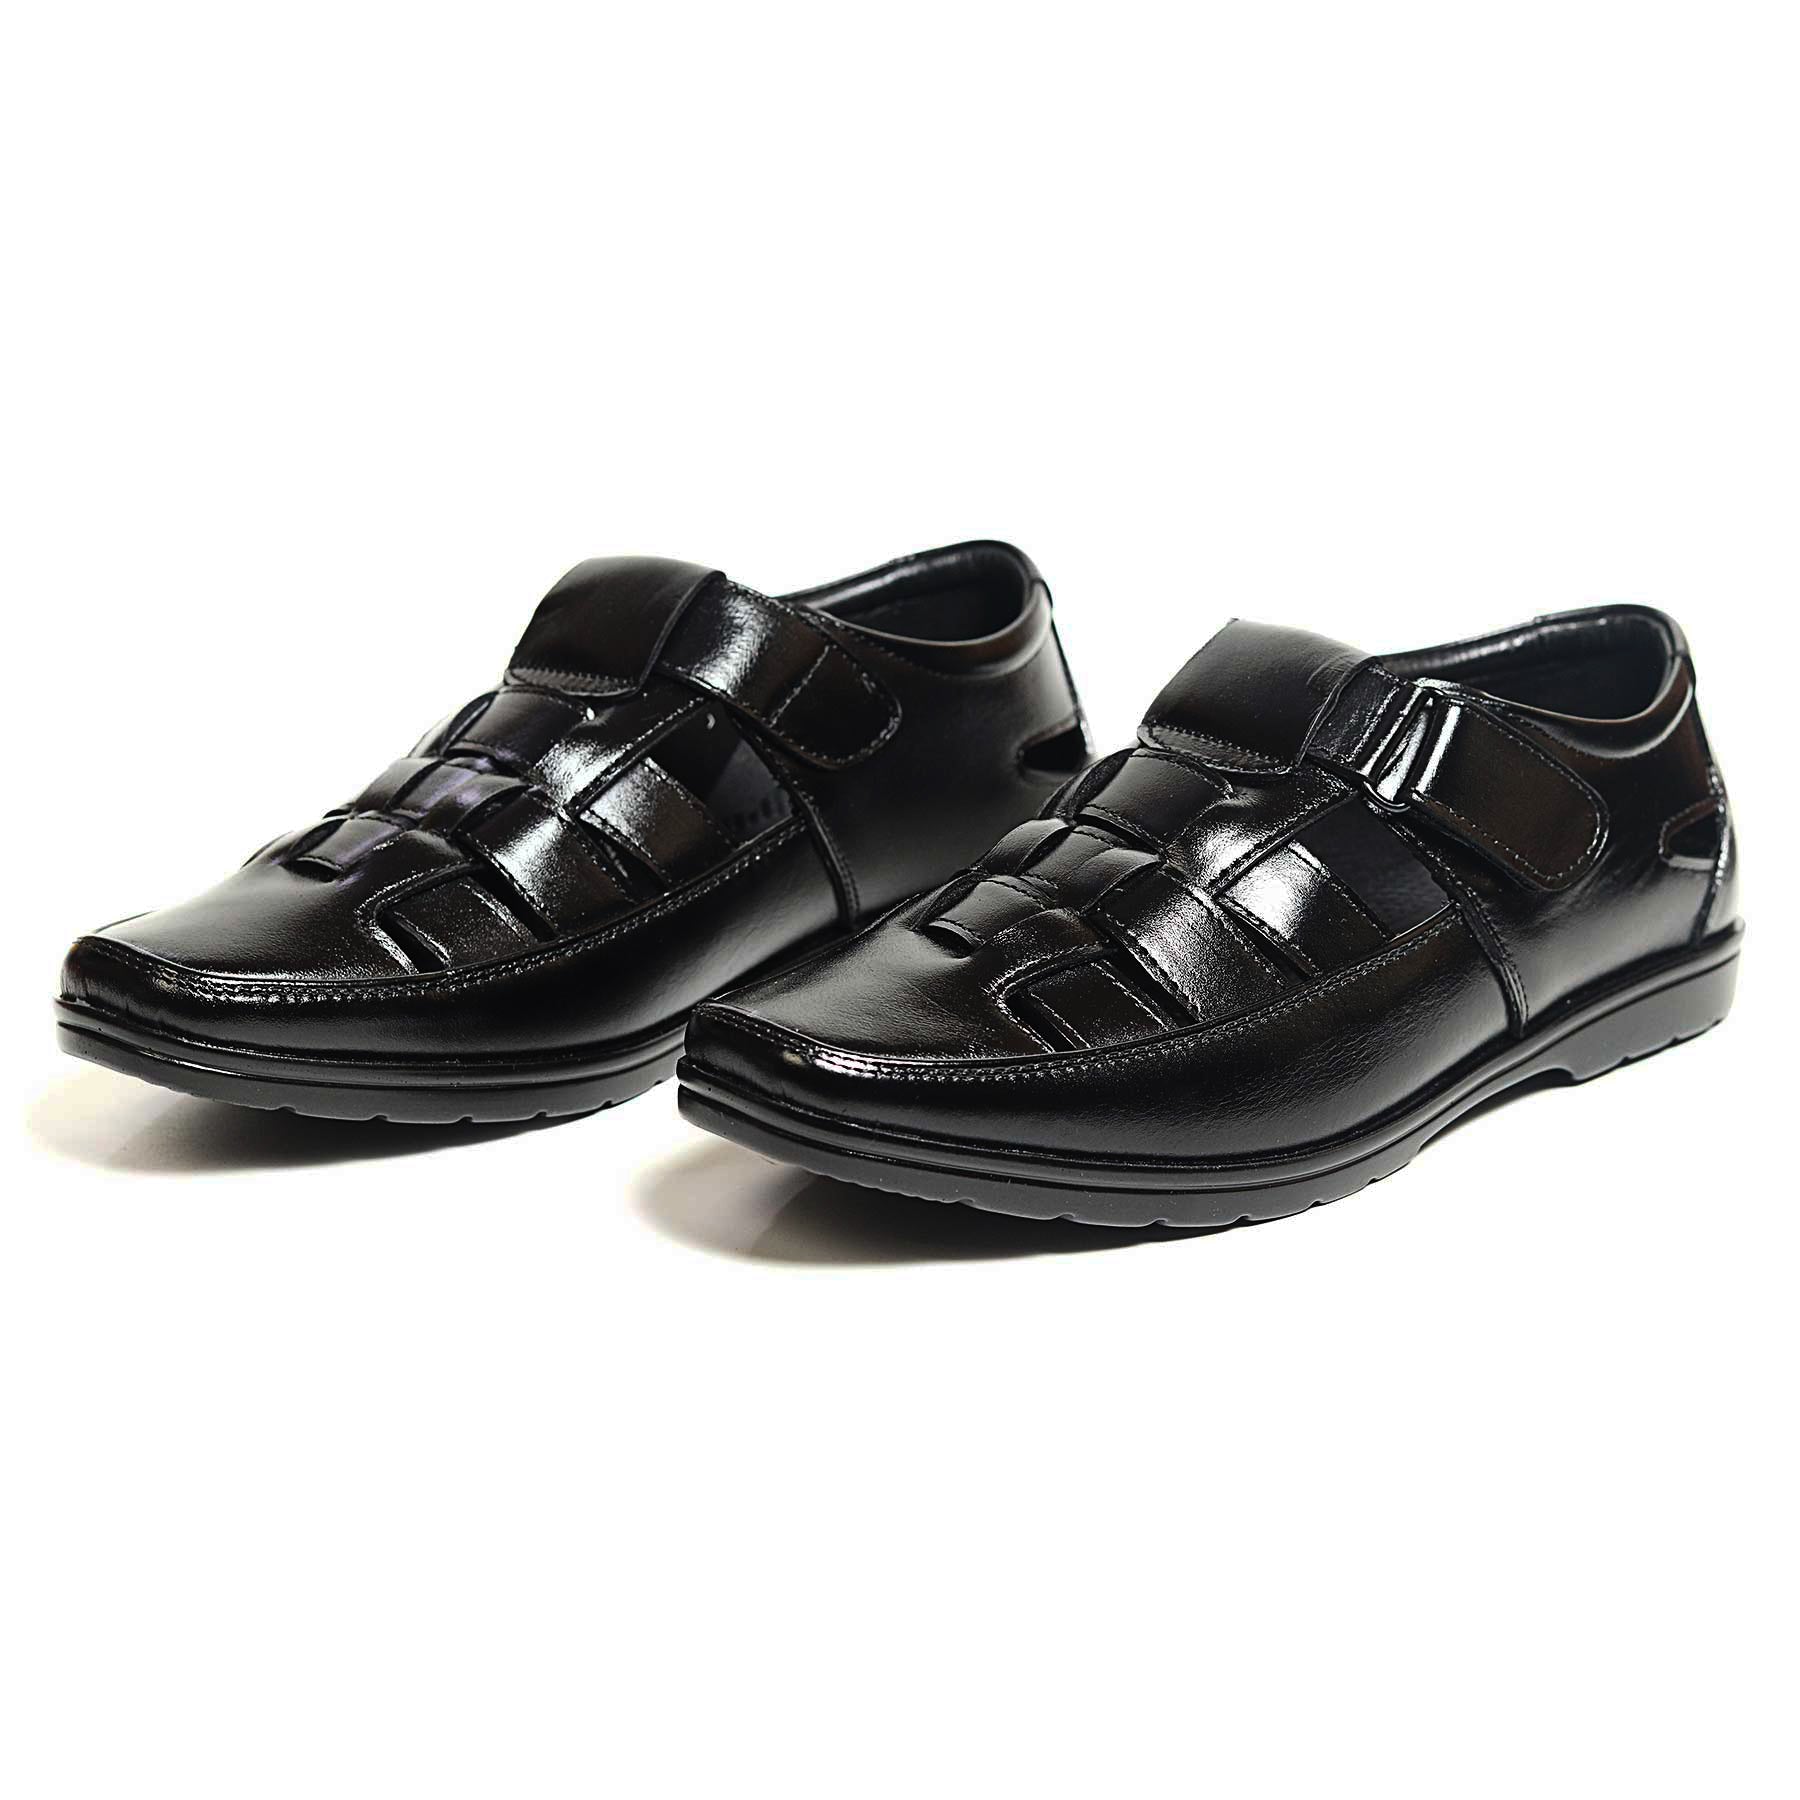 Zays Leather Premium Close Sandal For Men (Black) - SF84